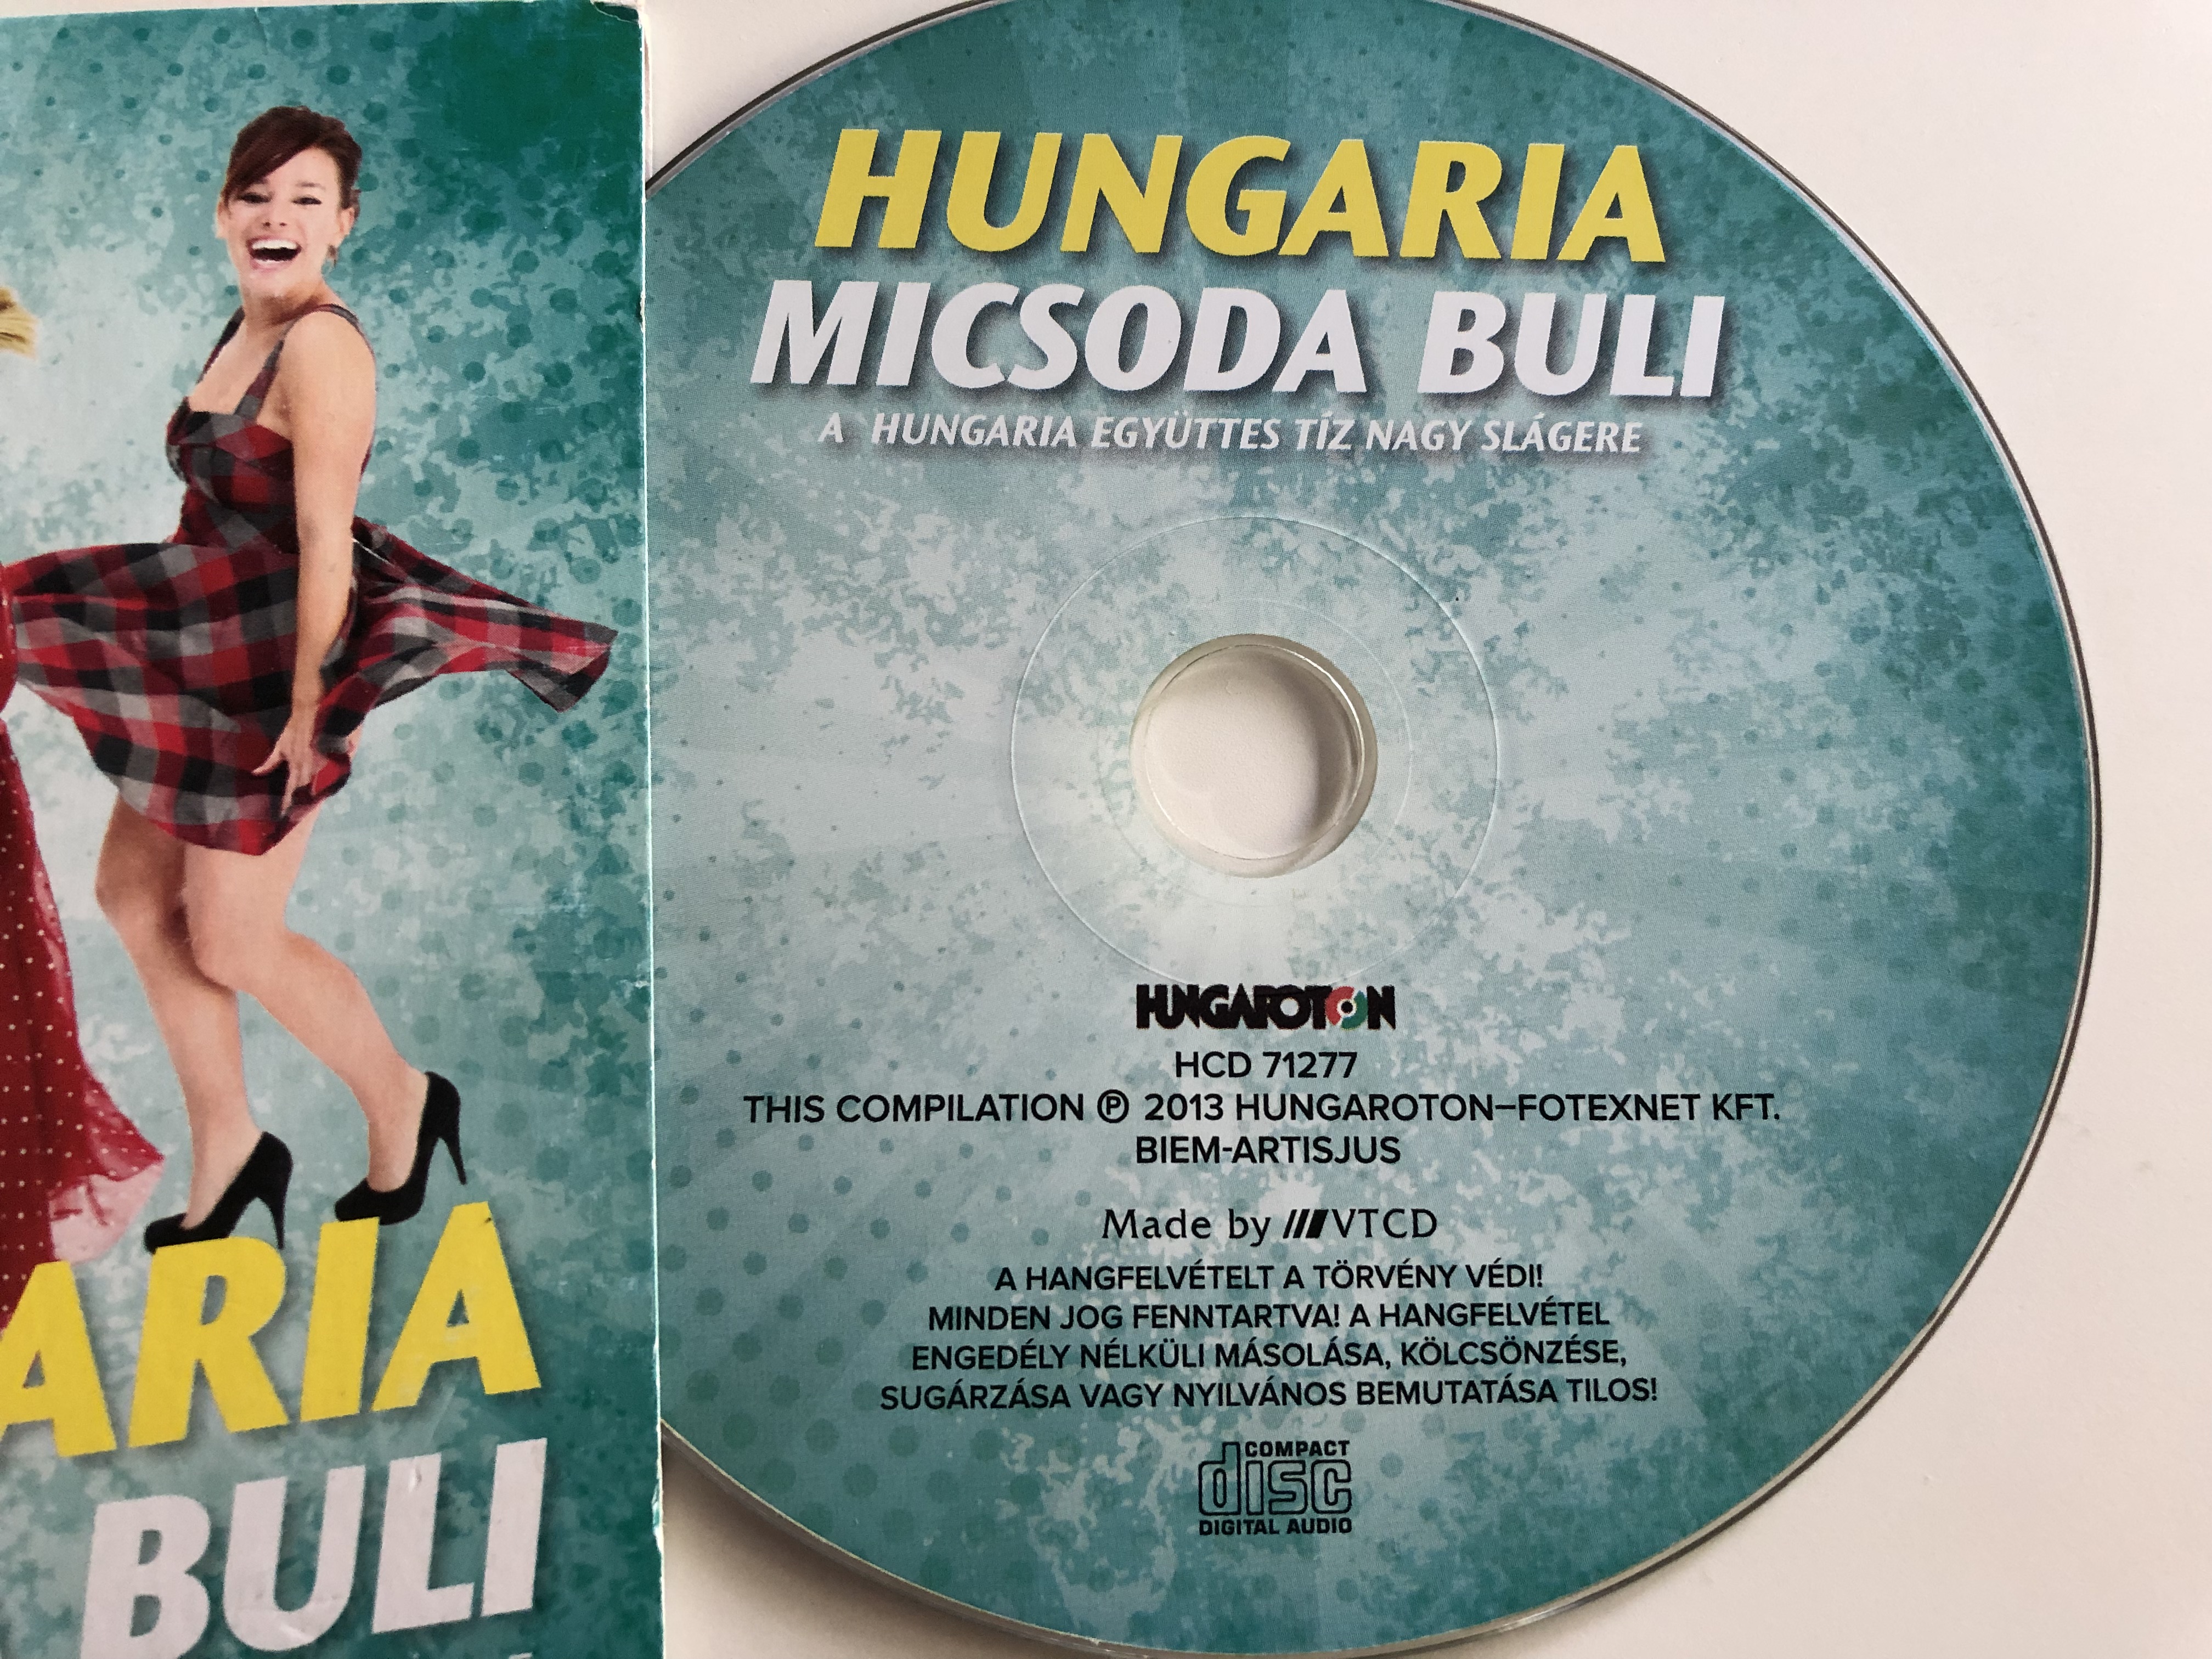 hungaria-micsoda-buli-eredeti-felv-telek-a-hung-ria-egy-ttes-t-z-nagy-sl-gere-audio-cd-2013-hungaroton-hcd-71277-3-.jpg